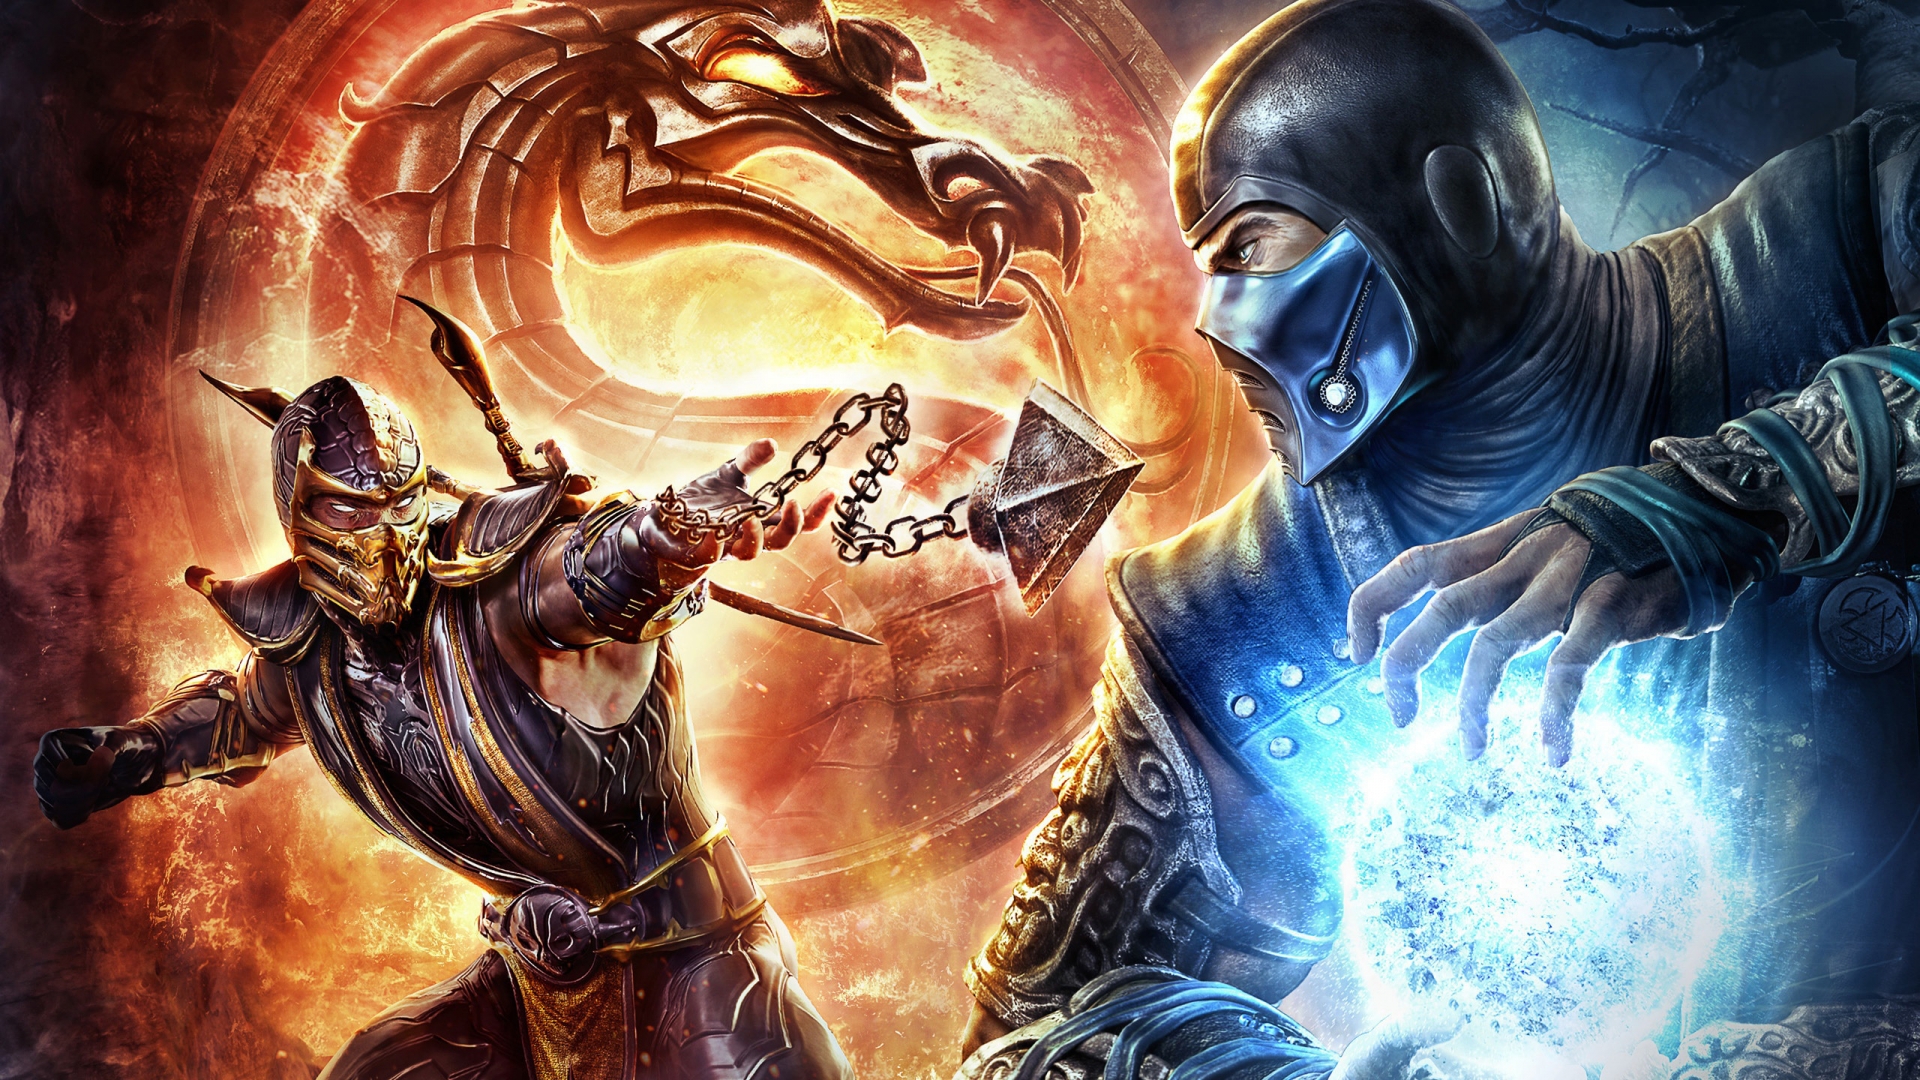 Mortal Kombat 9 Sub-Zero Fatality 1, 2, 3, Stage And Babality (HD) 